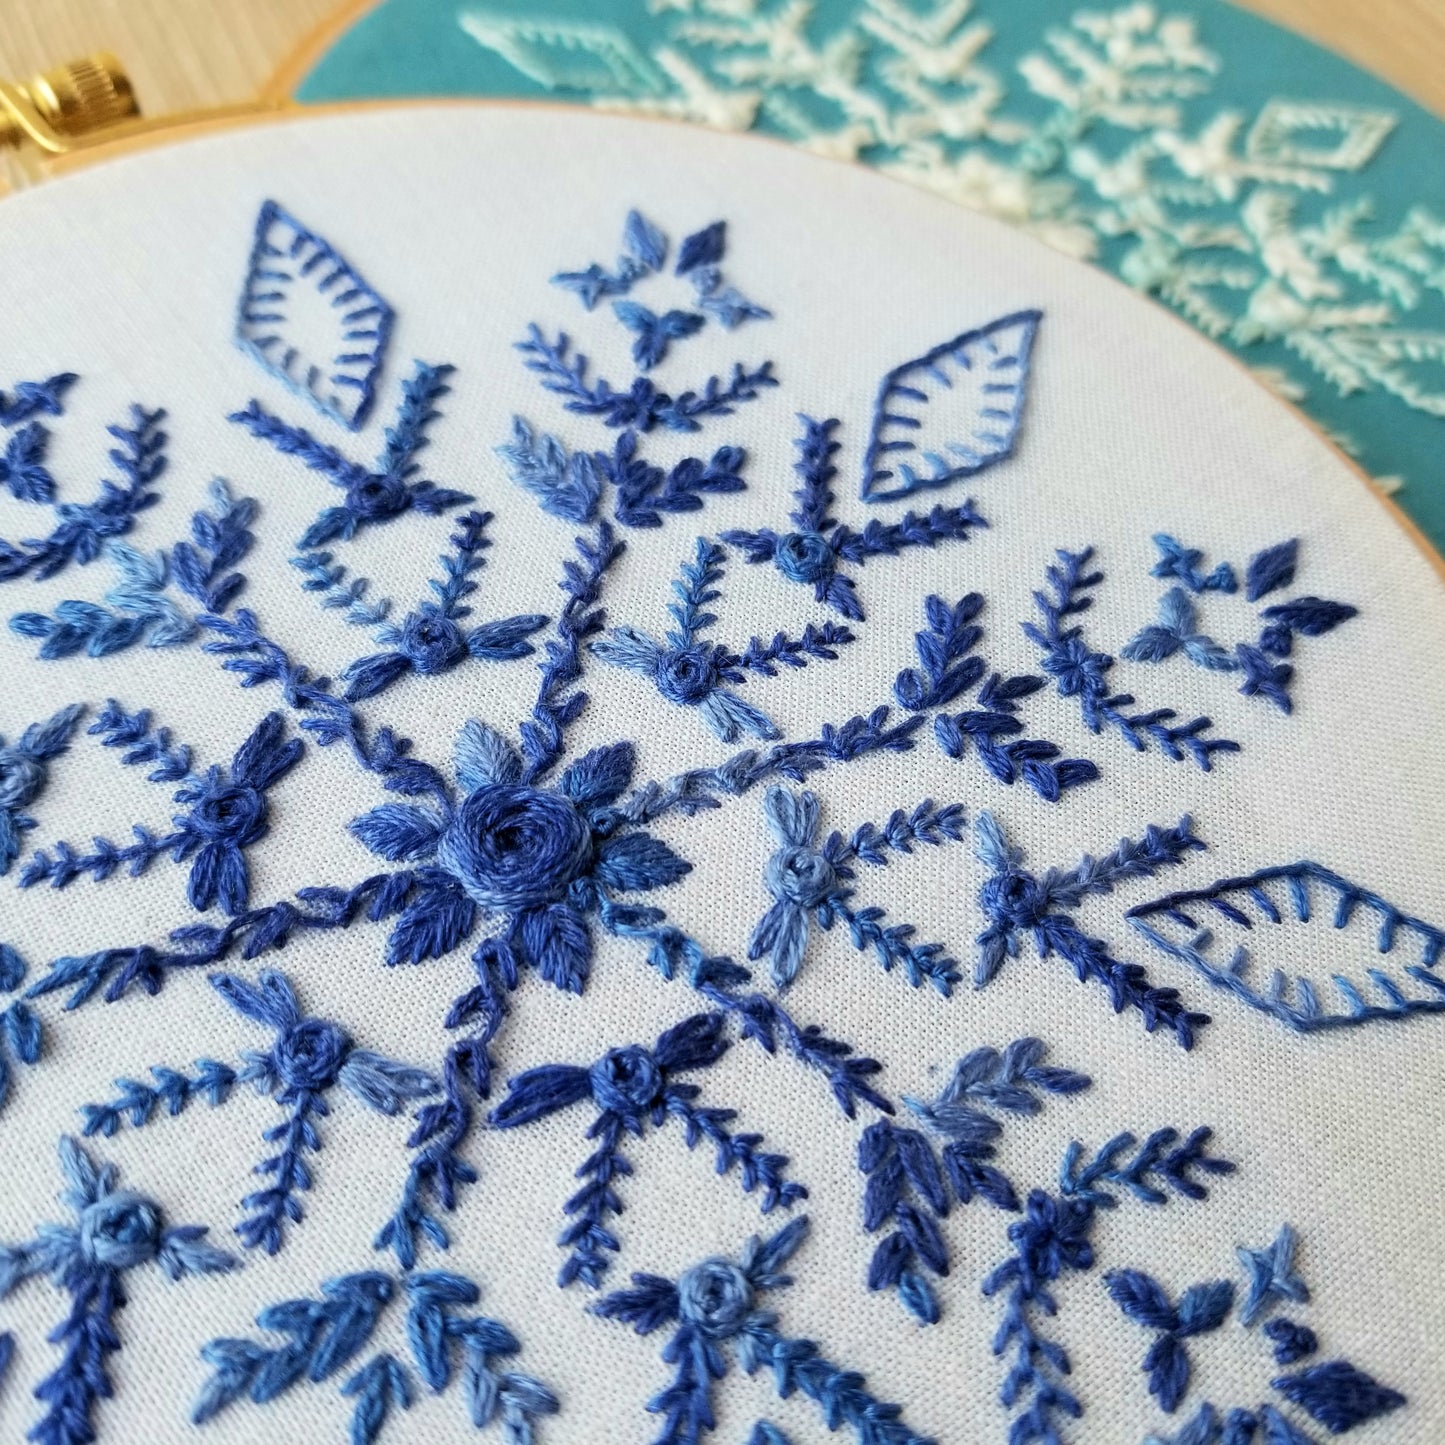 Snowflake Sampler Embroidery Pattern (PDF)